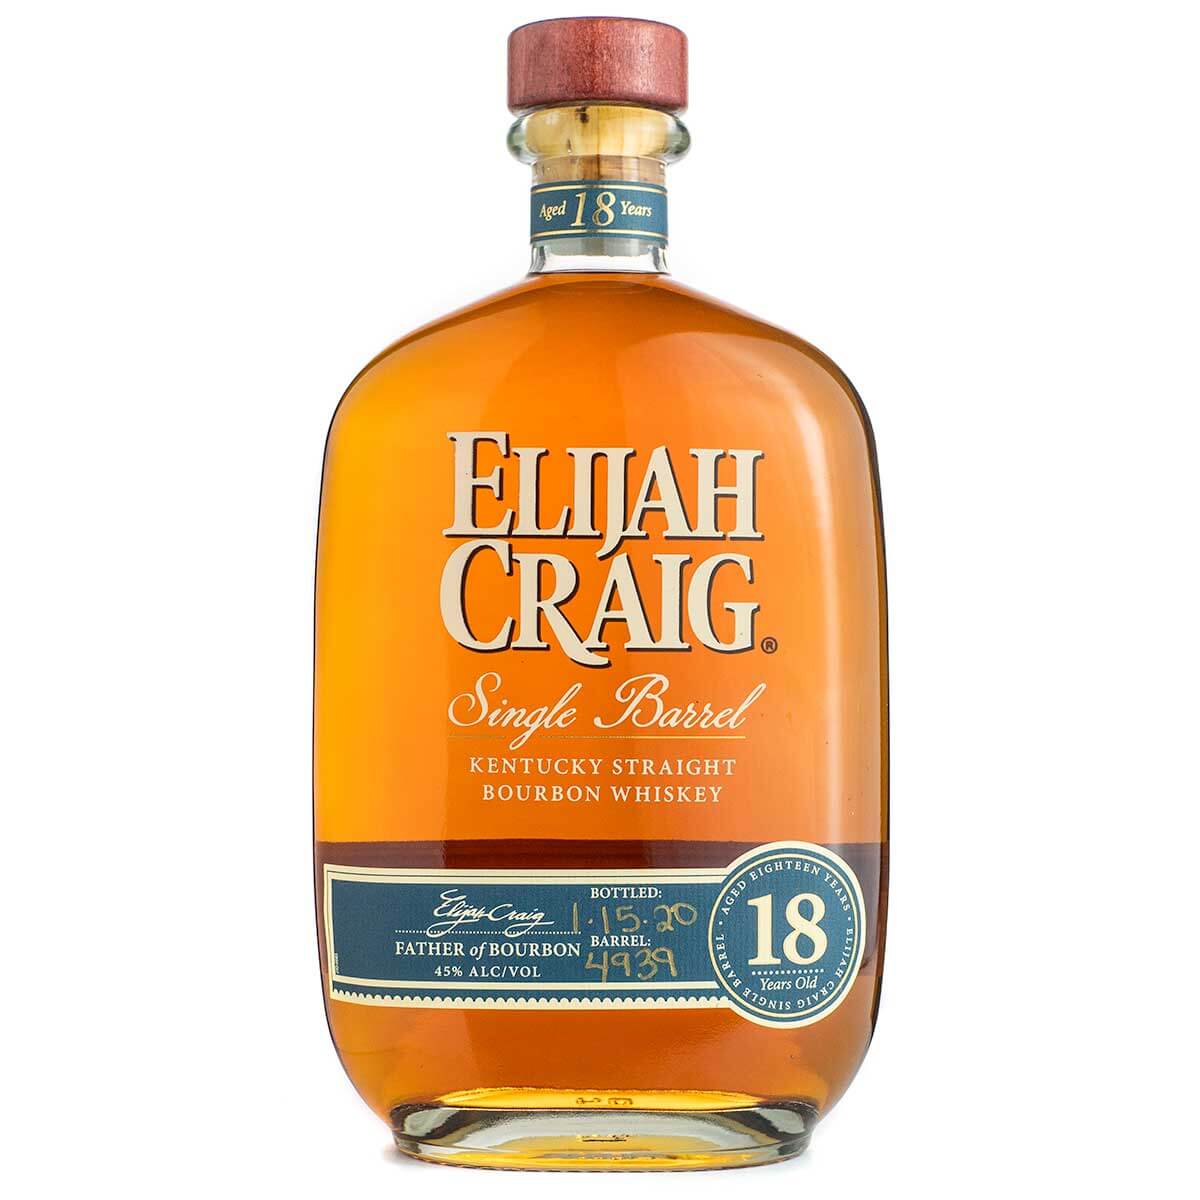 Elijah Craig 23 Year Old Single Barrel - bottle